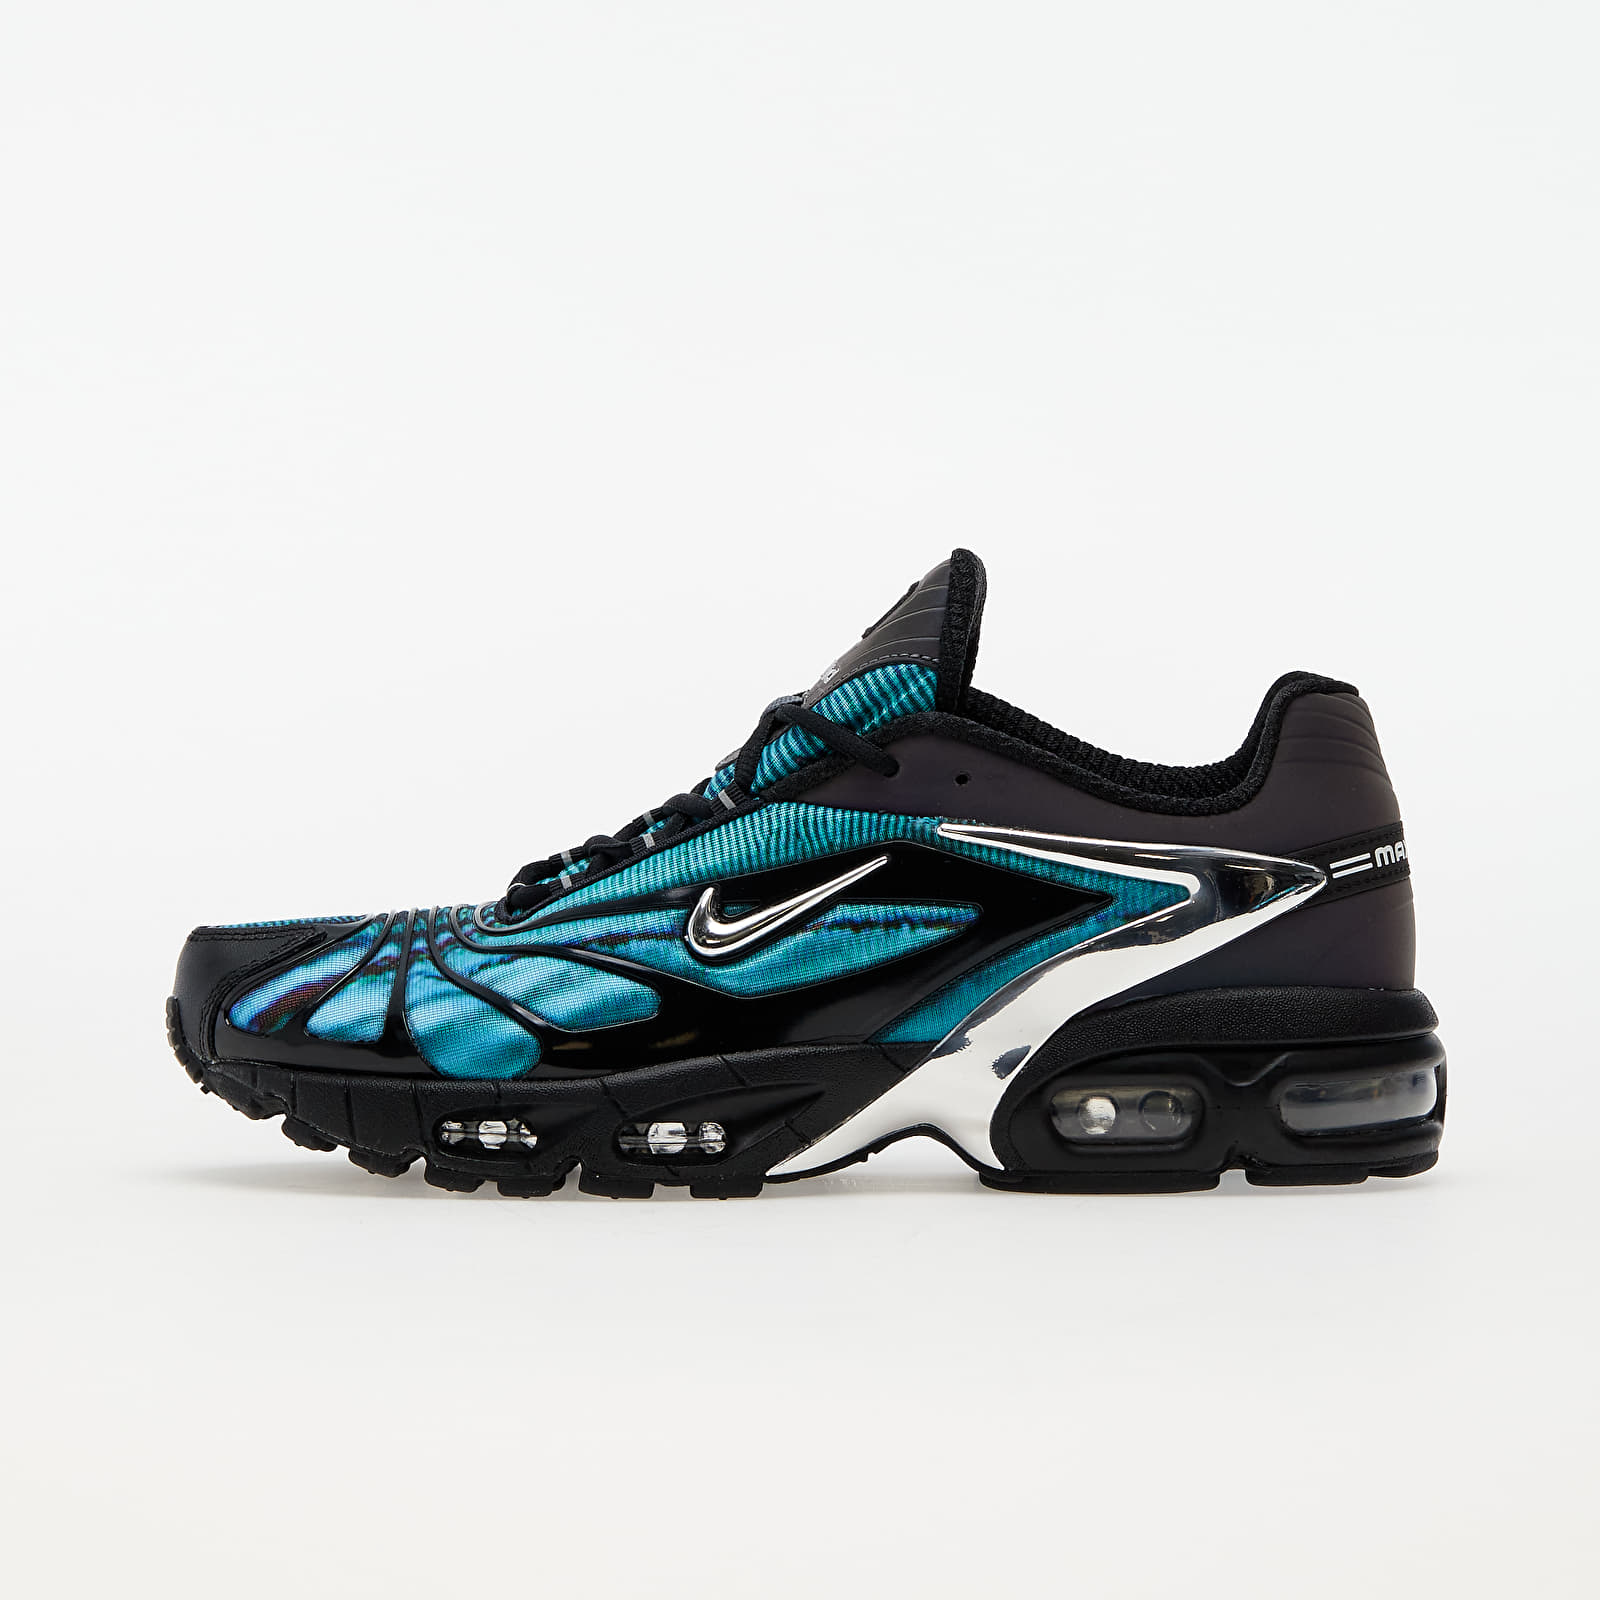 Men's shoes Nike x Skepta Air Max Tailwind V Black/ Chrome